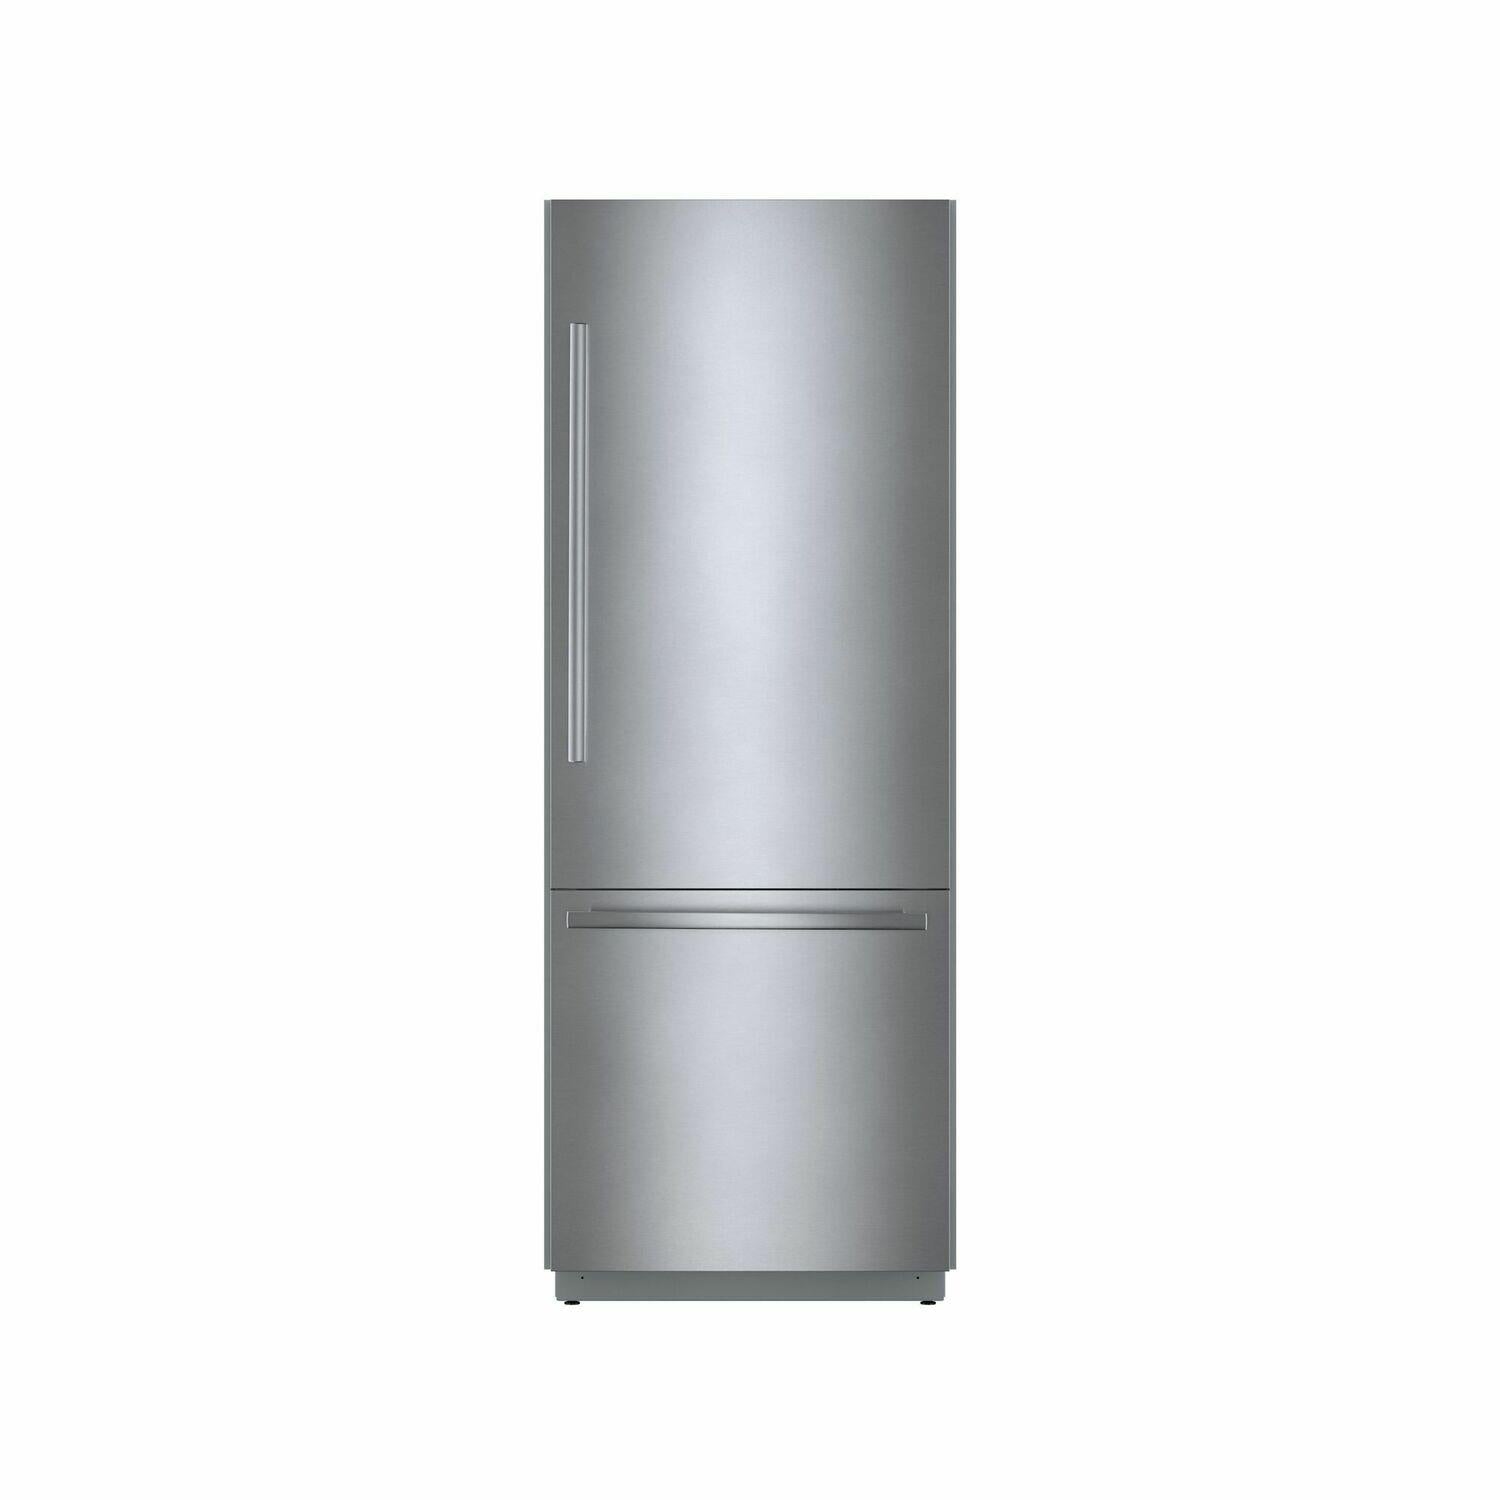 Bosch Benchmark Built-In Bottom Freezer Refrigerator 30 Flat Hinge B30bb935ss Stainless Steel